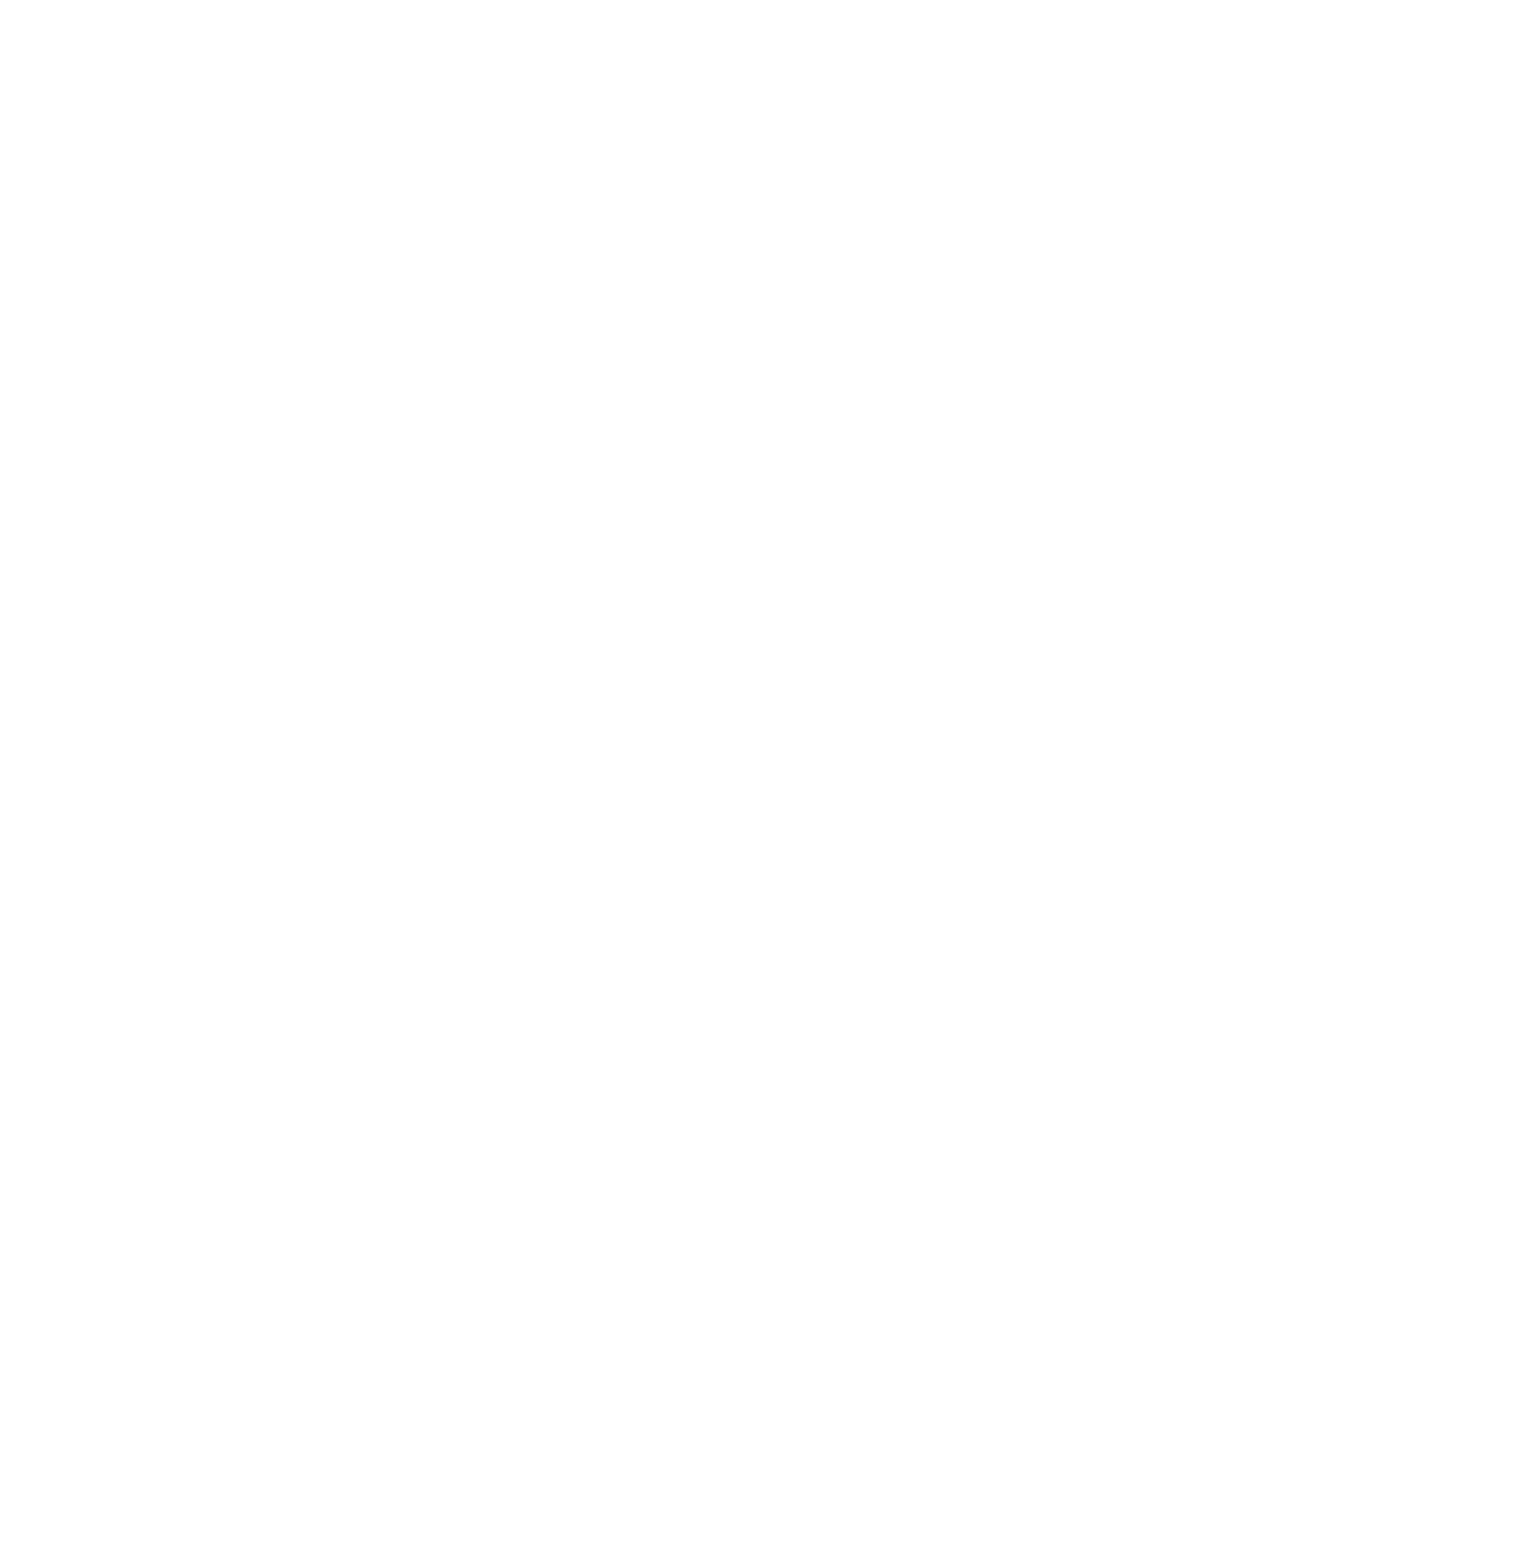 Sabesp logo pour fonds sombres (PNG transparent)